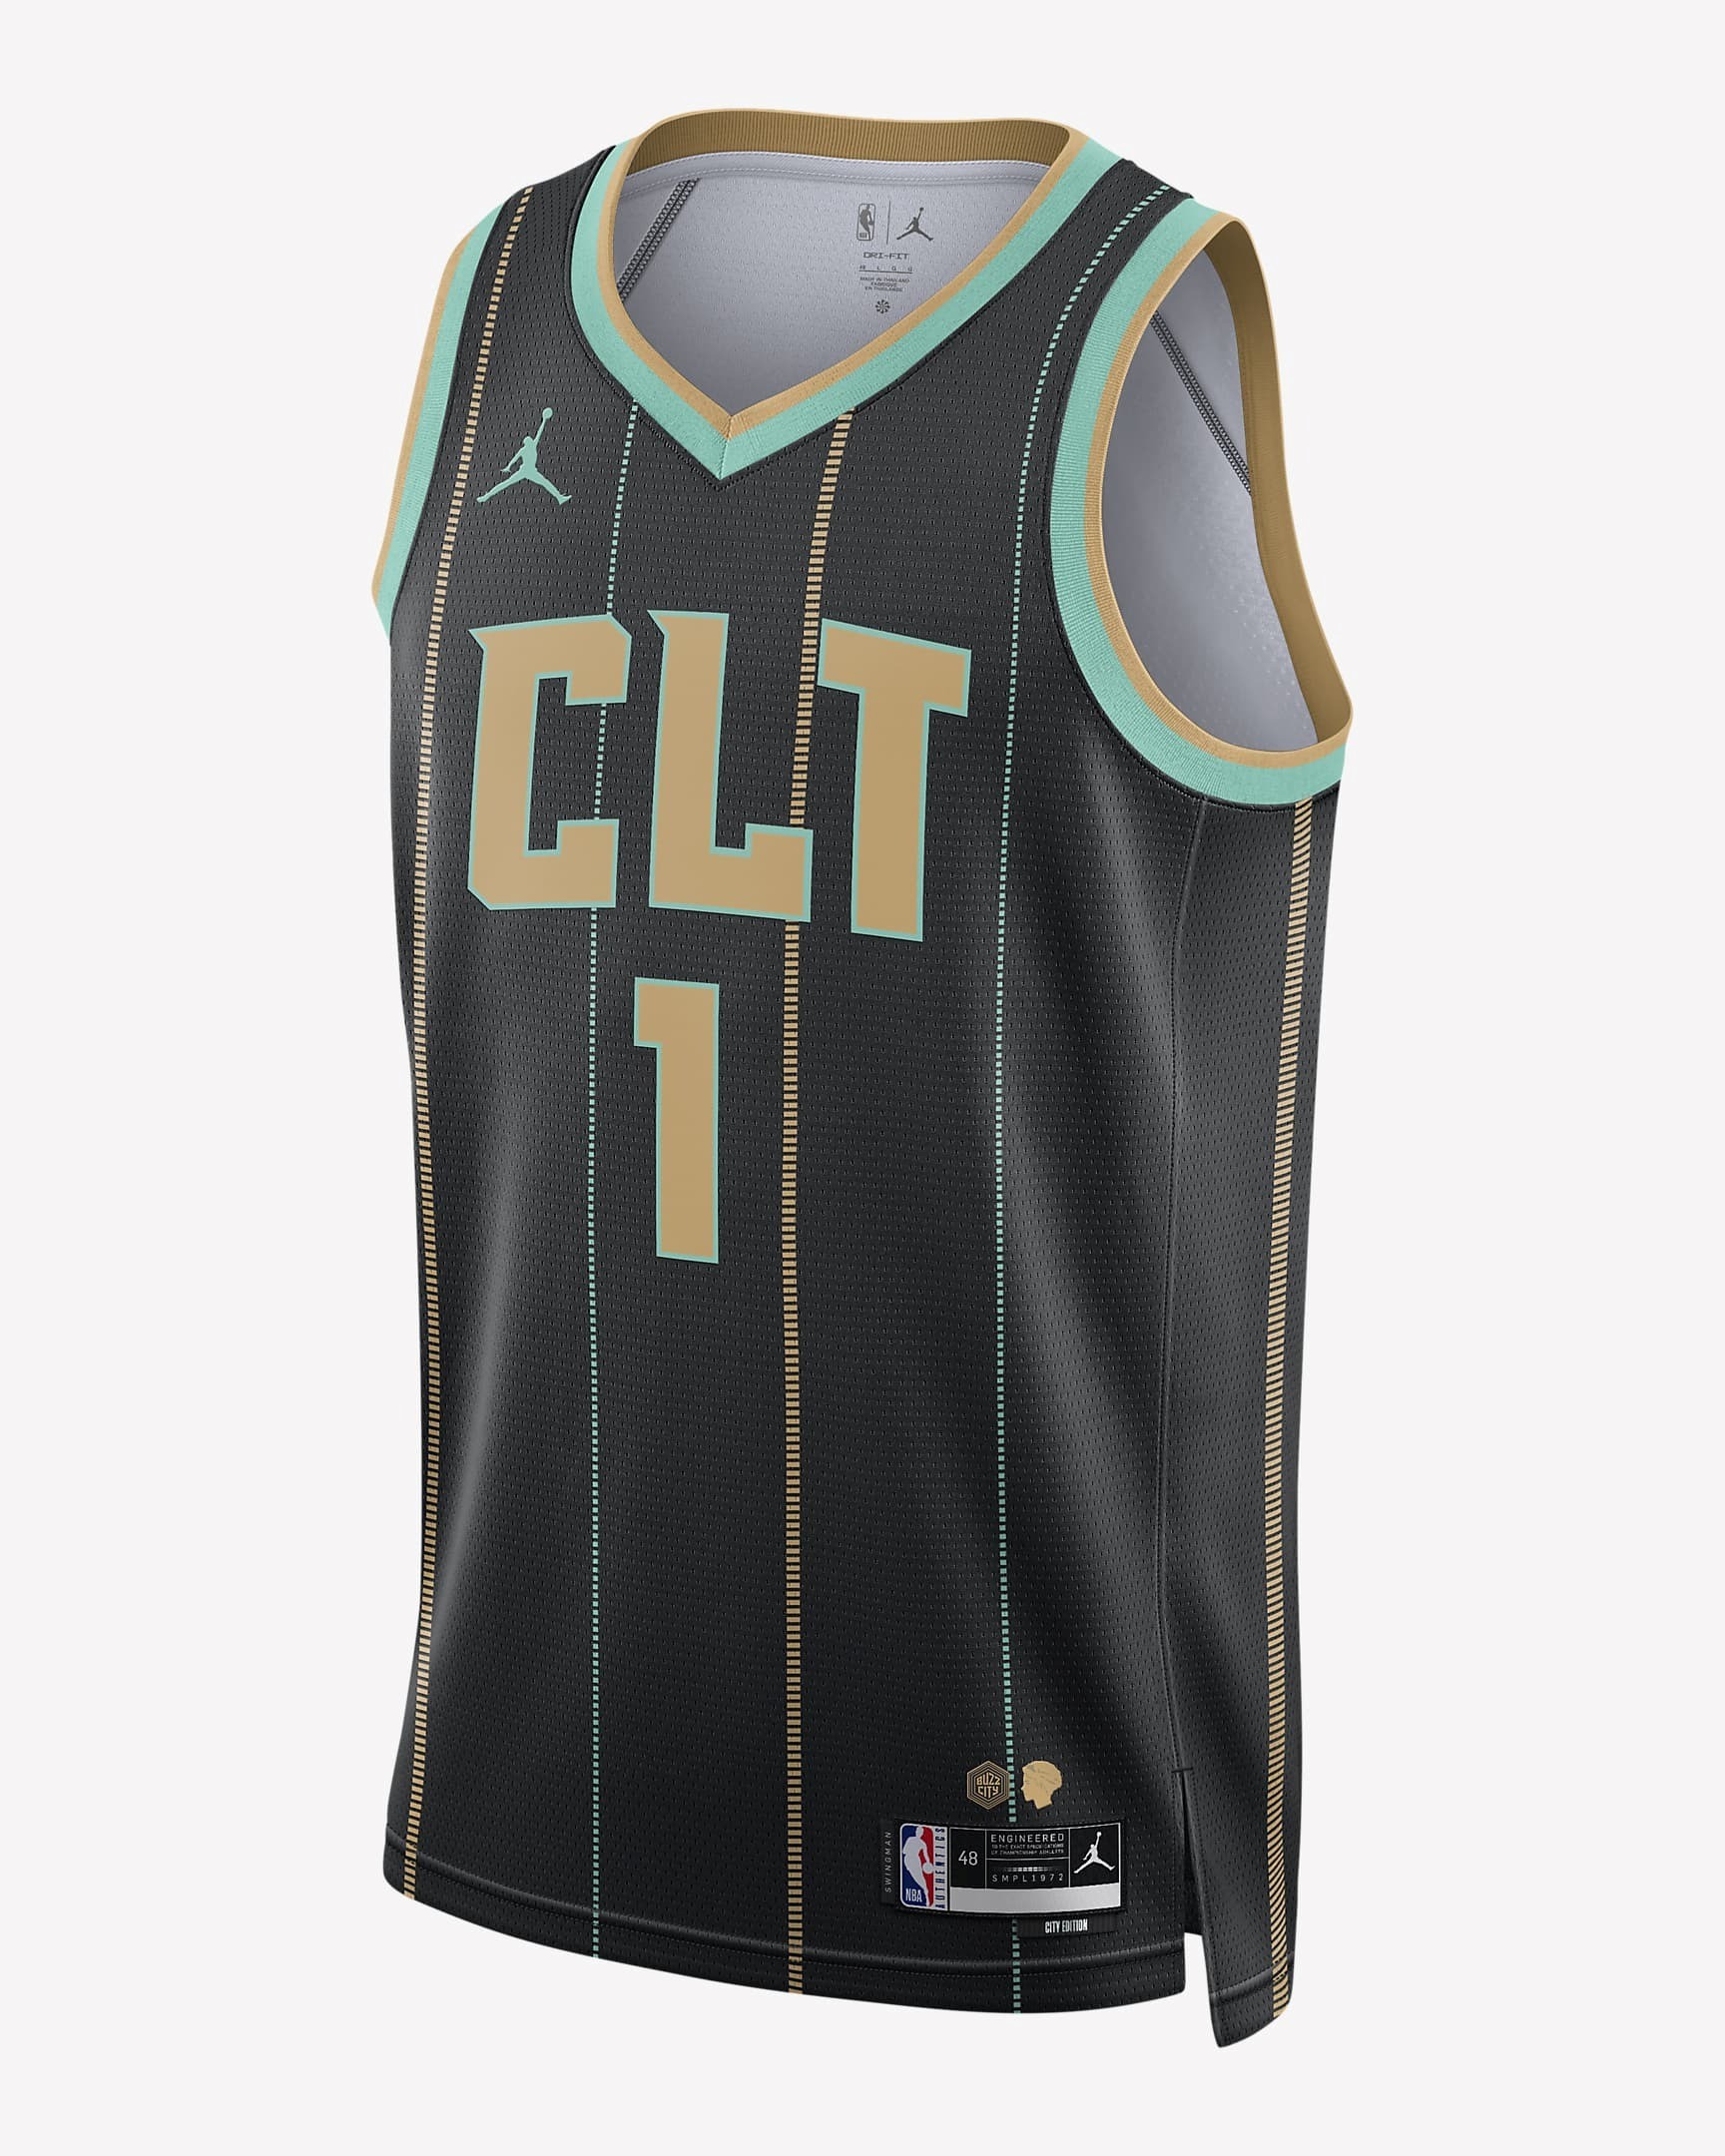 Size M Charlotte Hornets NBA Jerseys for sale